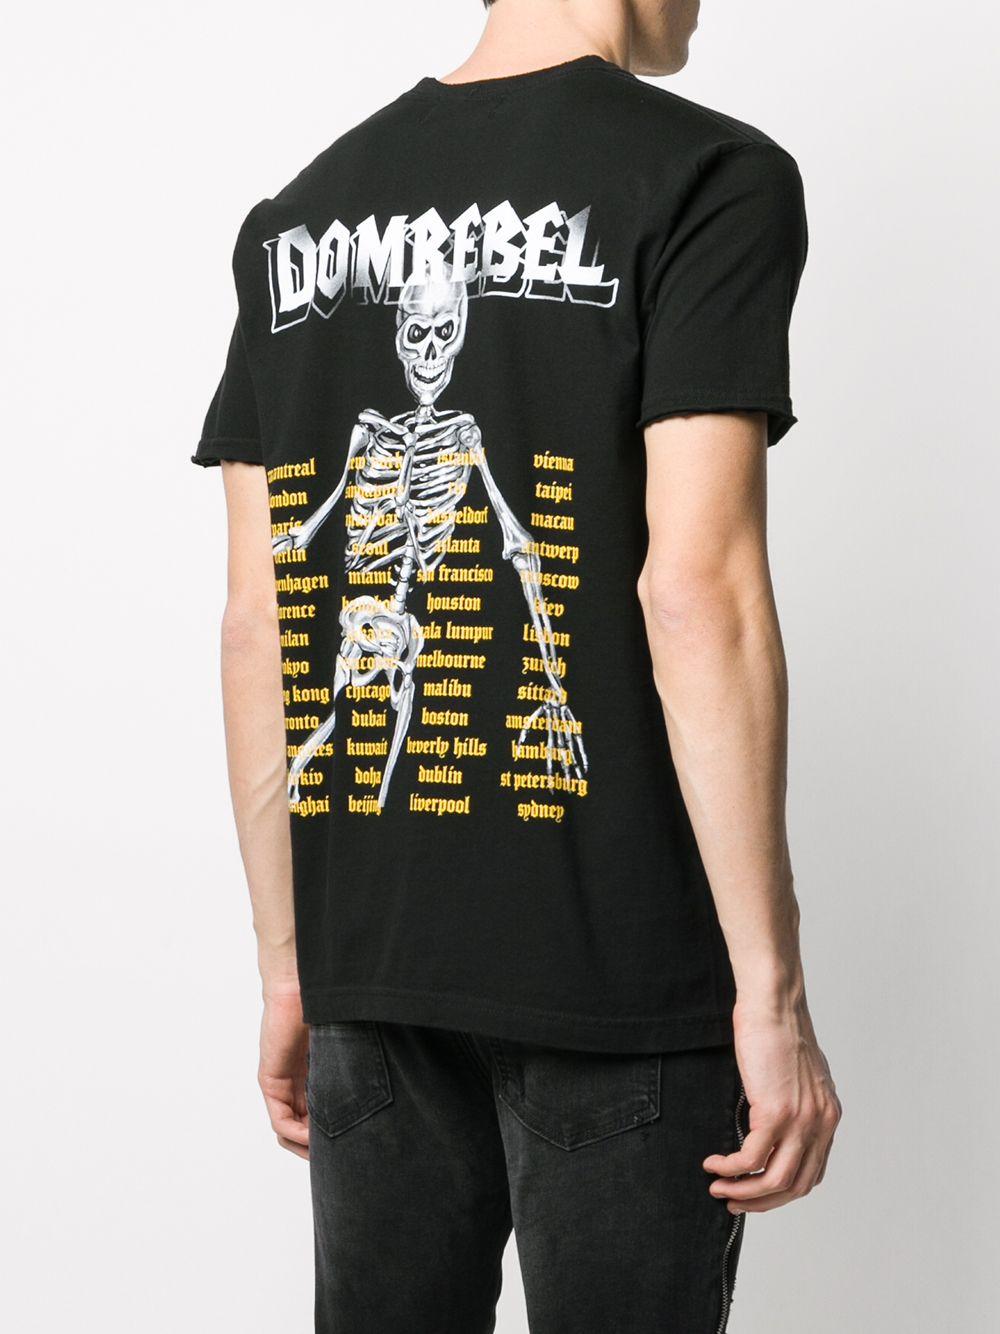 DOMREBEL Cotton Skeleton Print T-shirt in Black for Men - Save 55% - Lyst